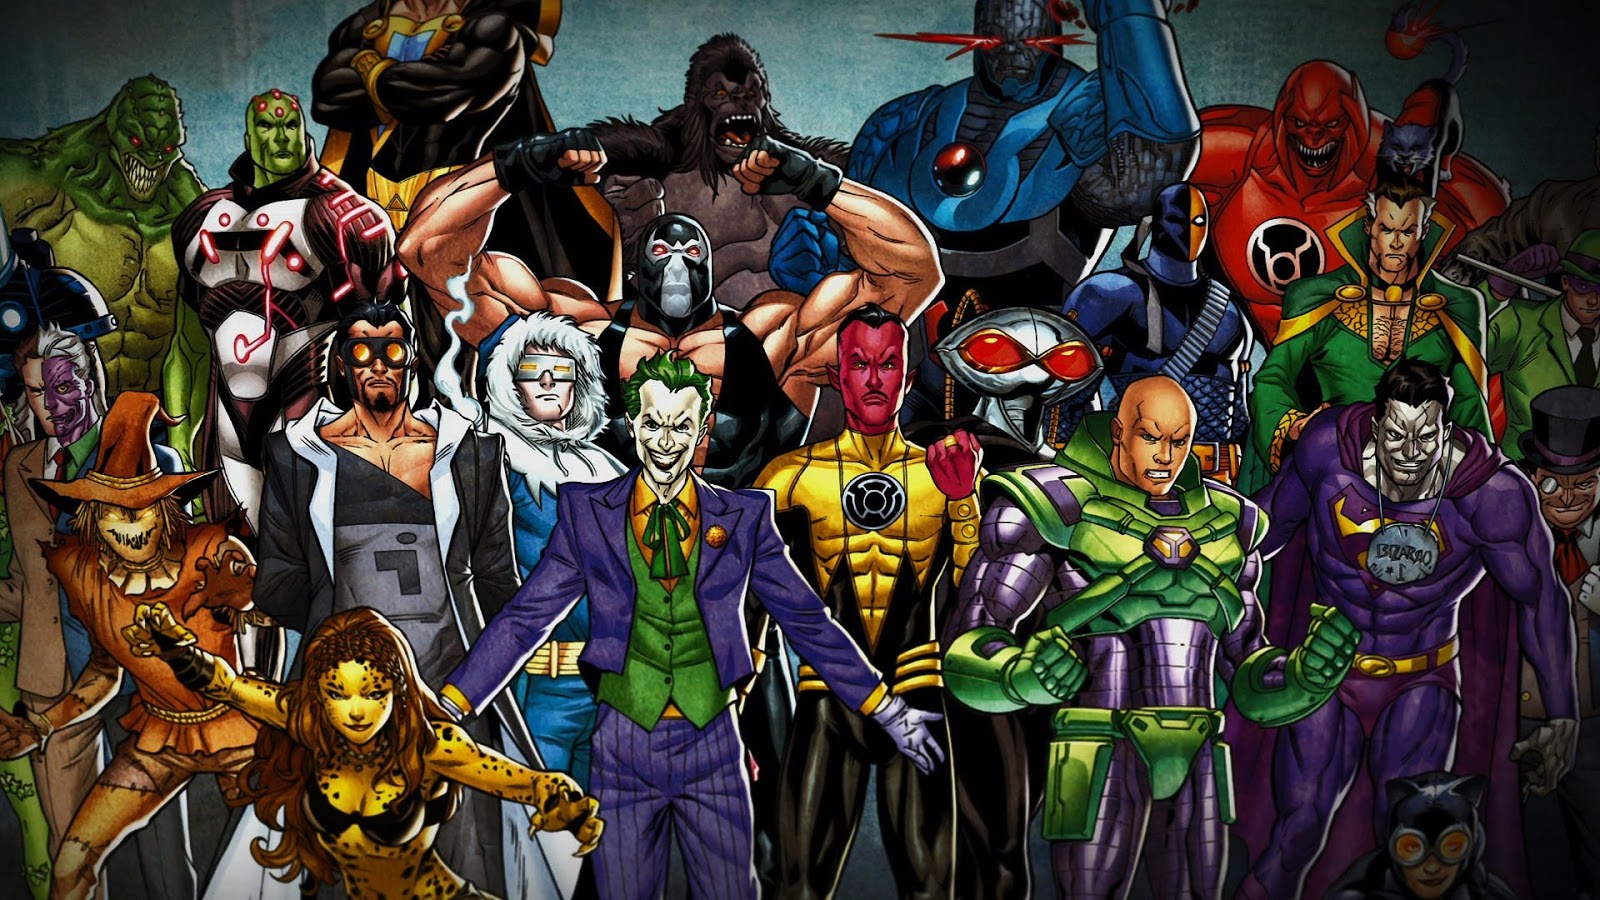 Justice League Wallpaper